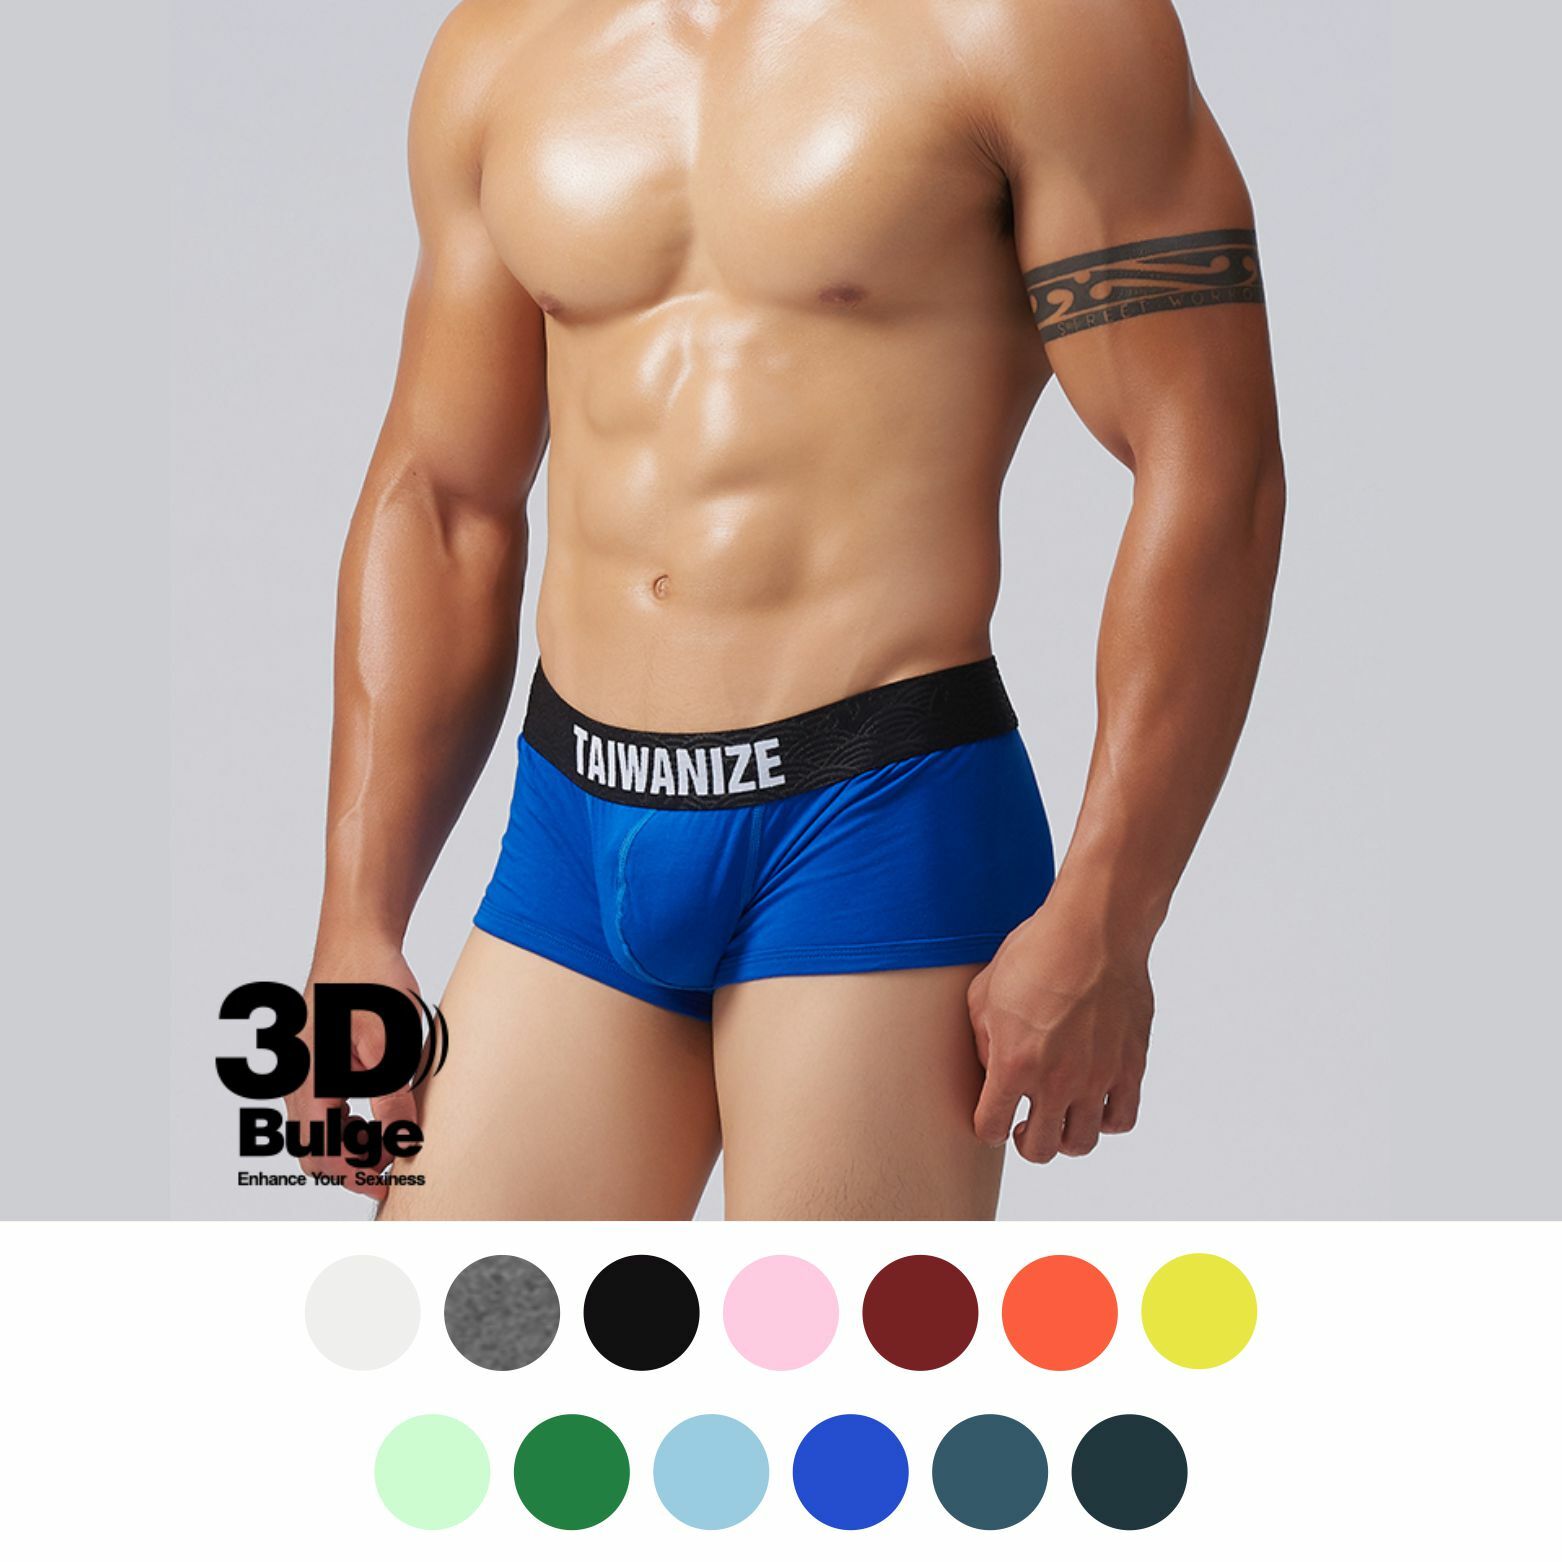 3D bulge Modal Sporty Briefs